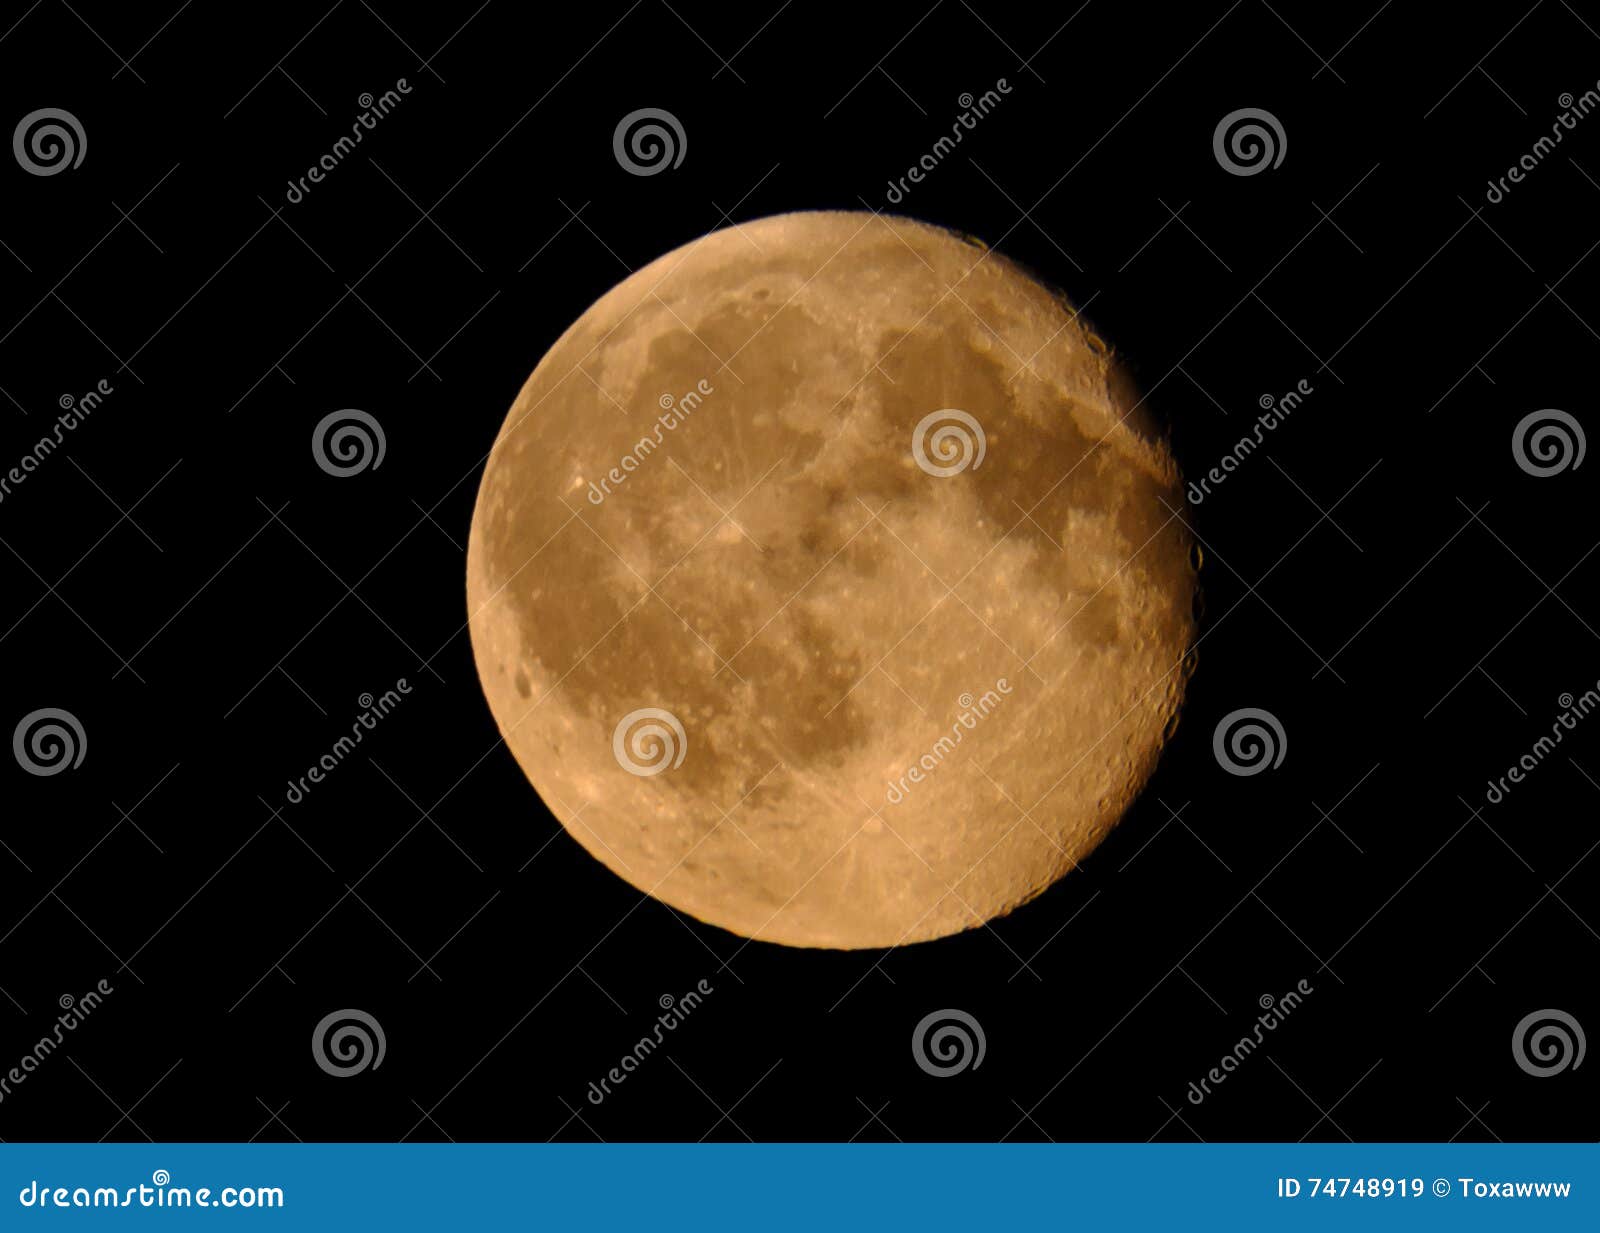 Full moon at black sky stock image. Image of sphere, moon - 74748919